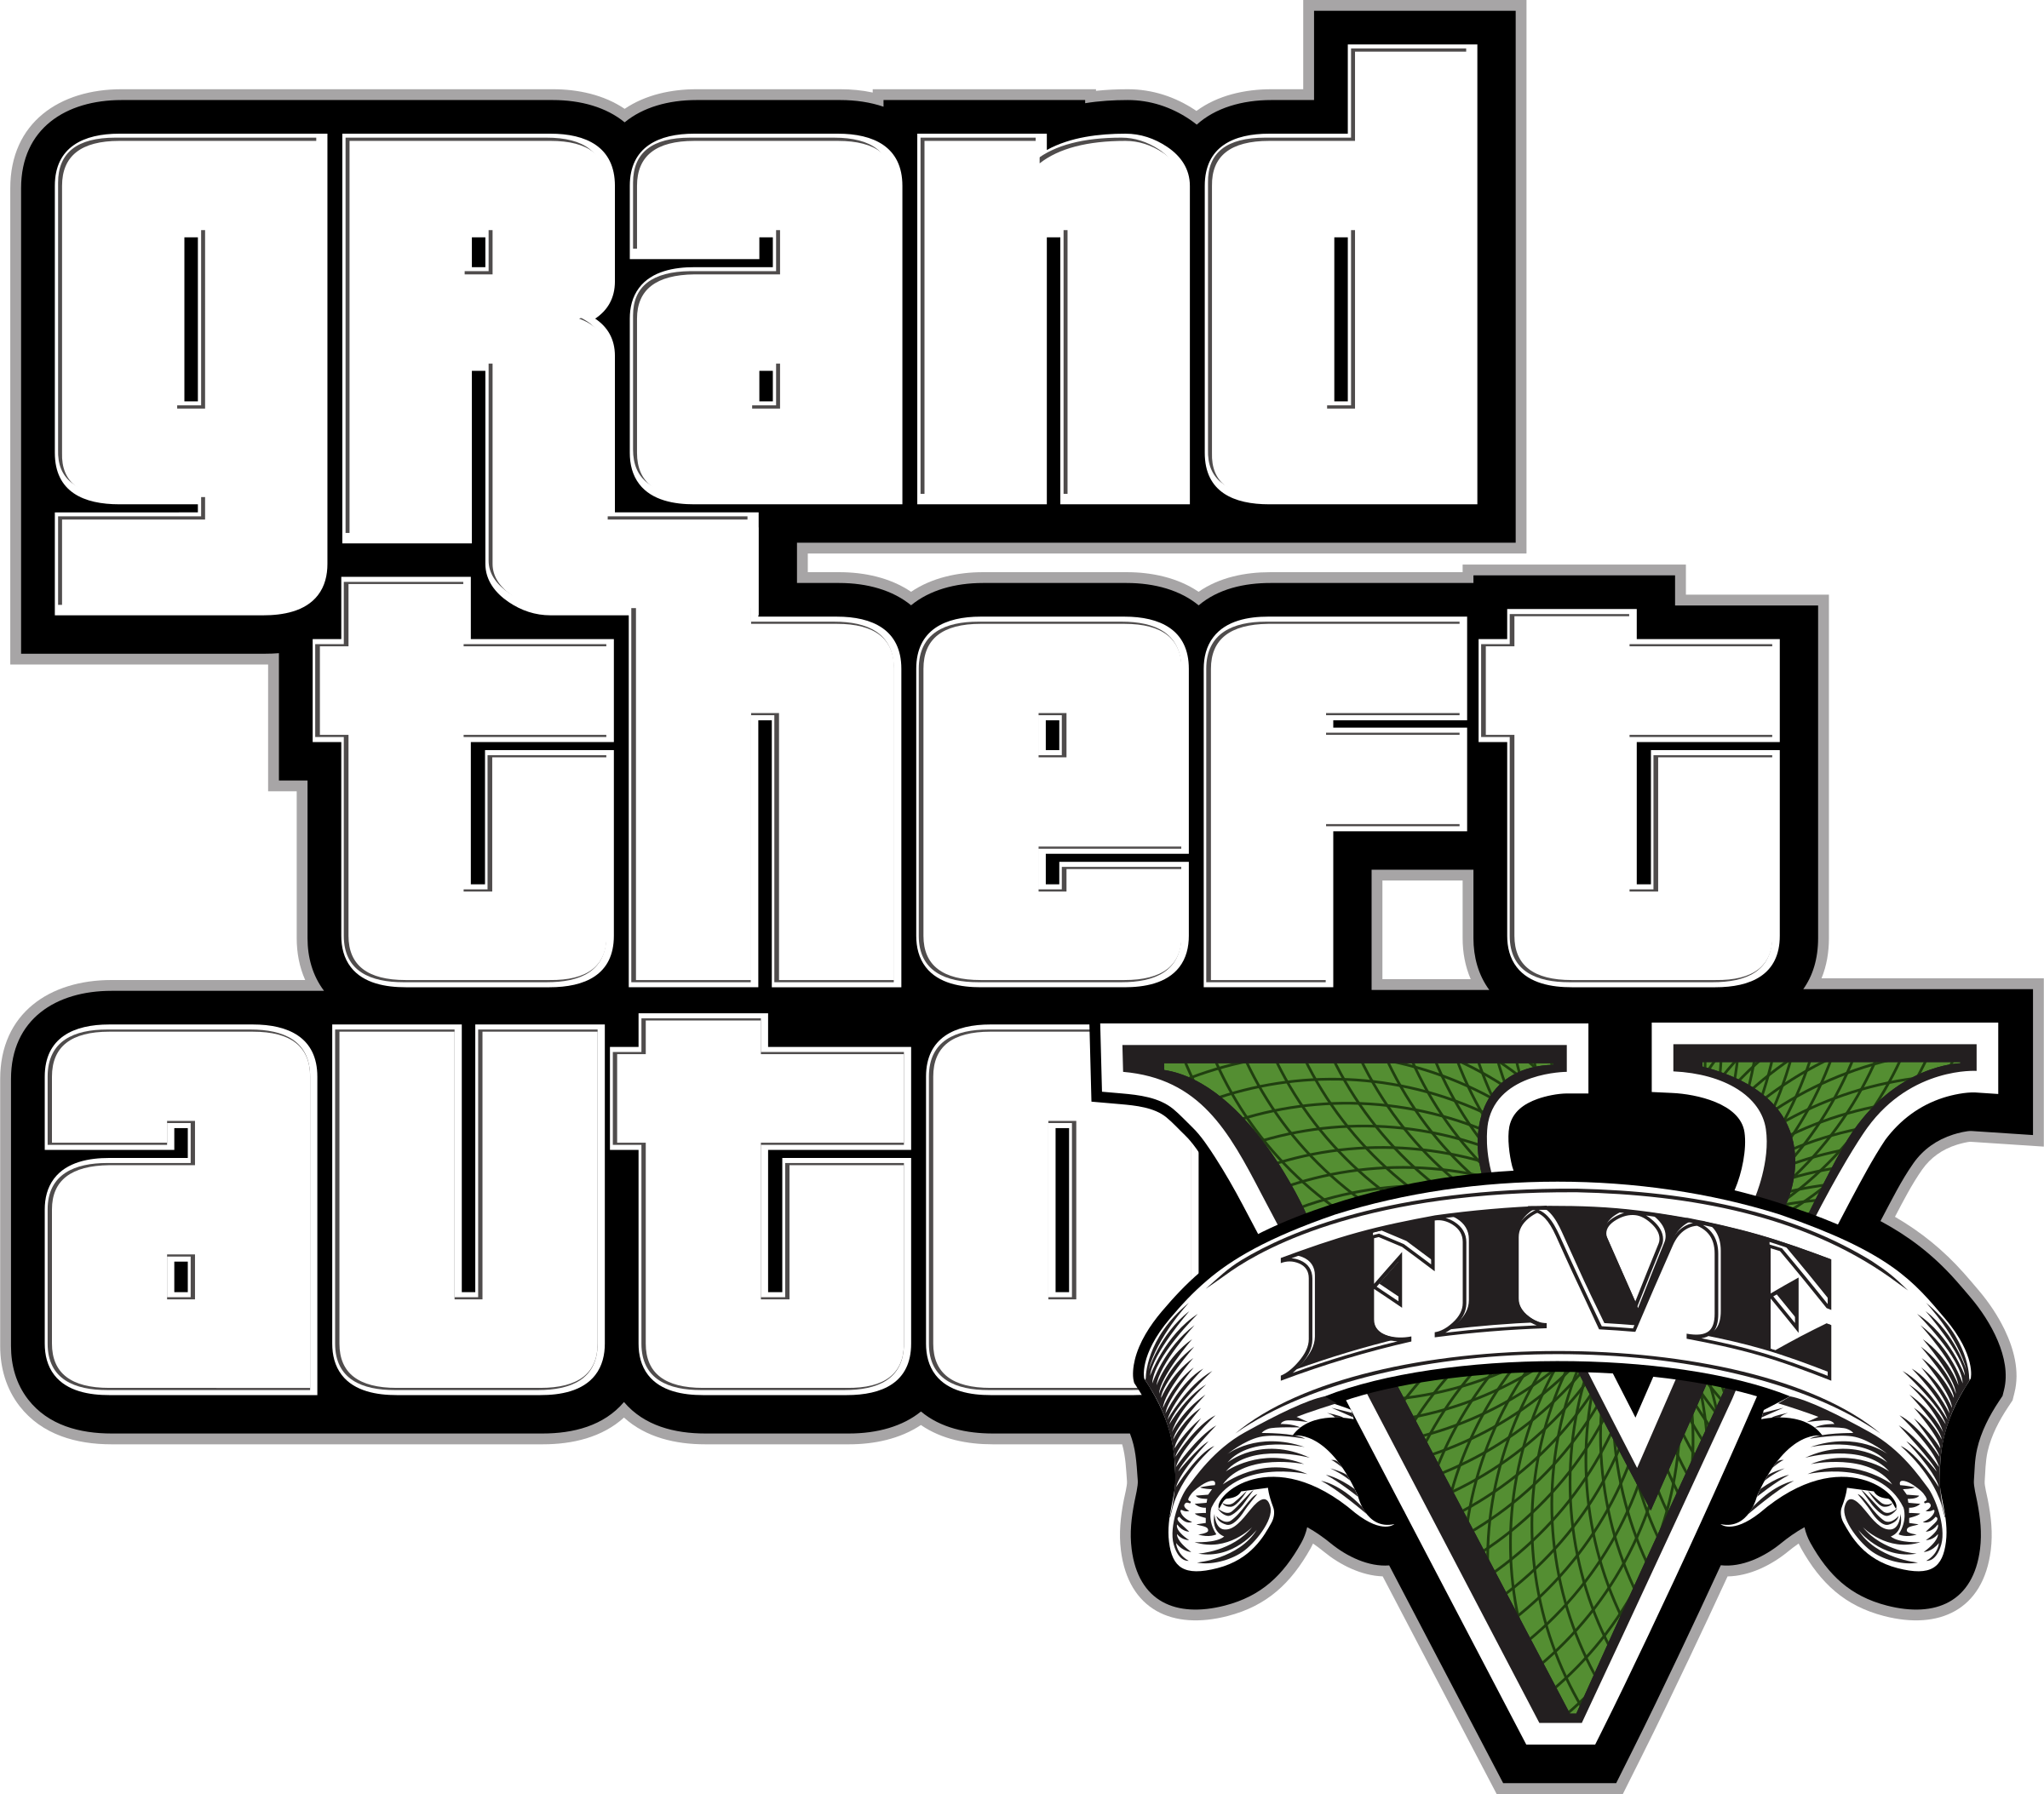 Grand Theft Auto V Logo PNG Transparent & SVG Vector.